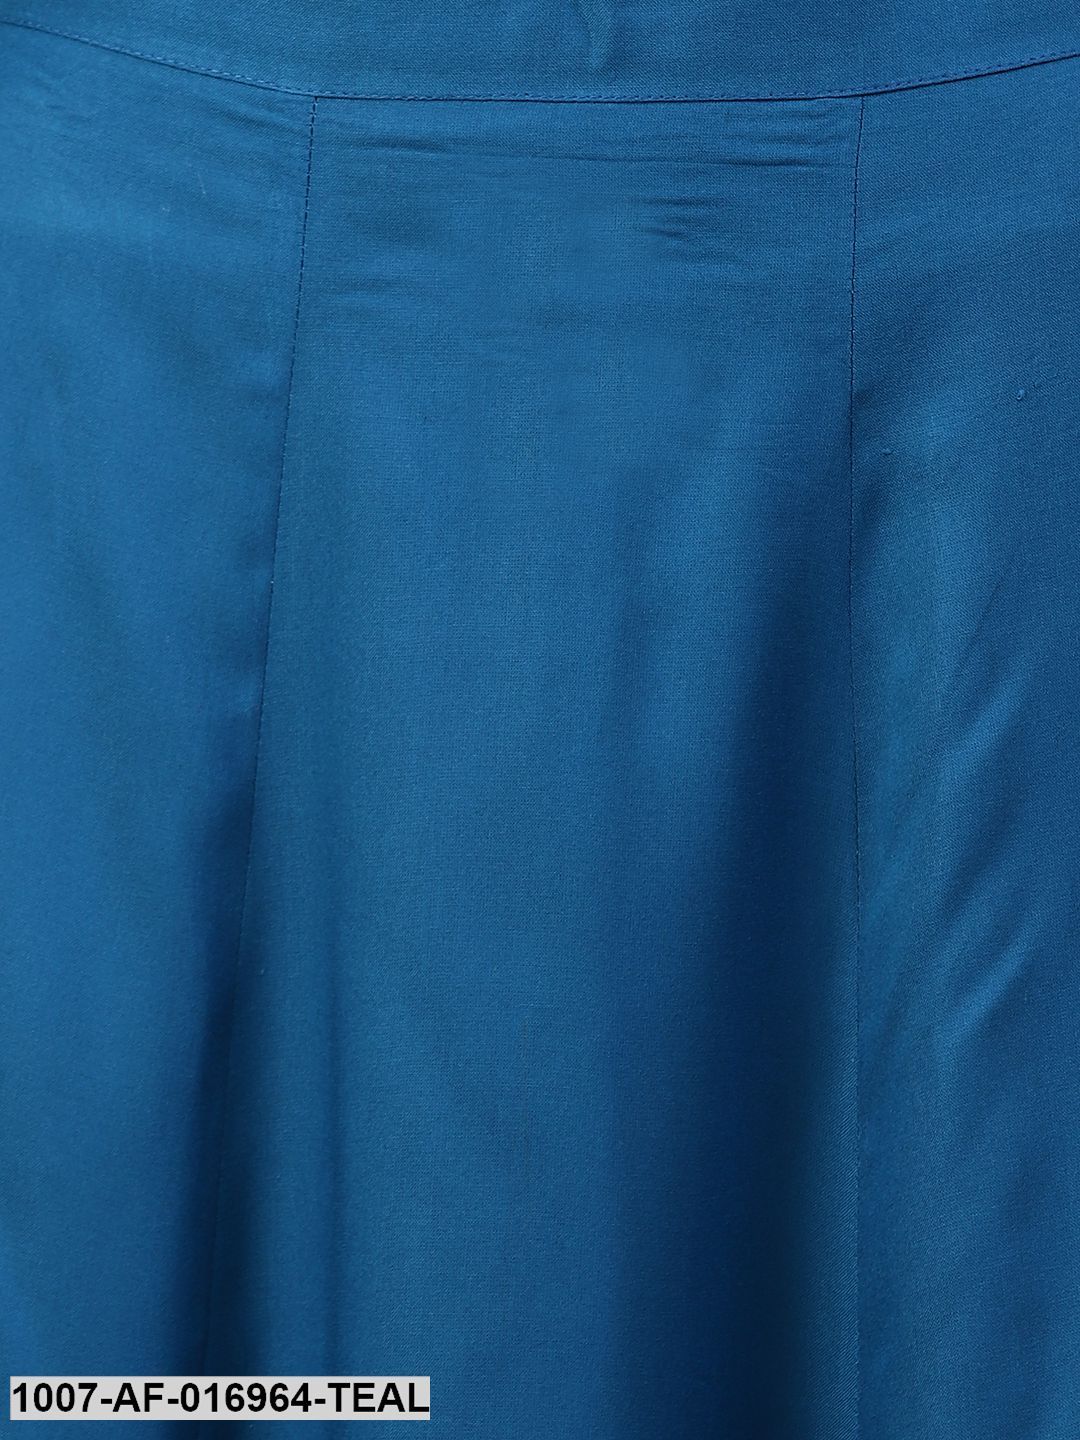 Embroidered Rayon Straight Kurta Skirt Dupatta Set (Teal Blue)